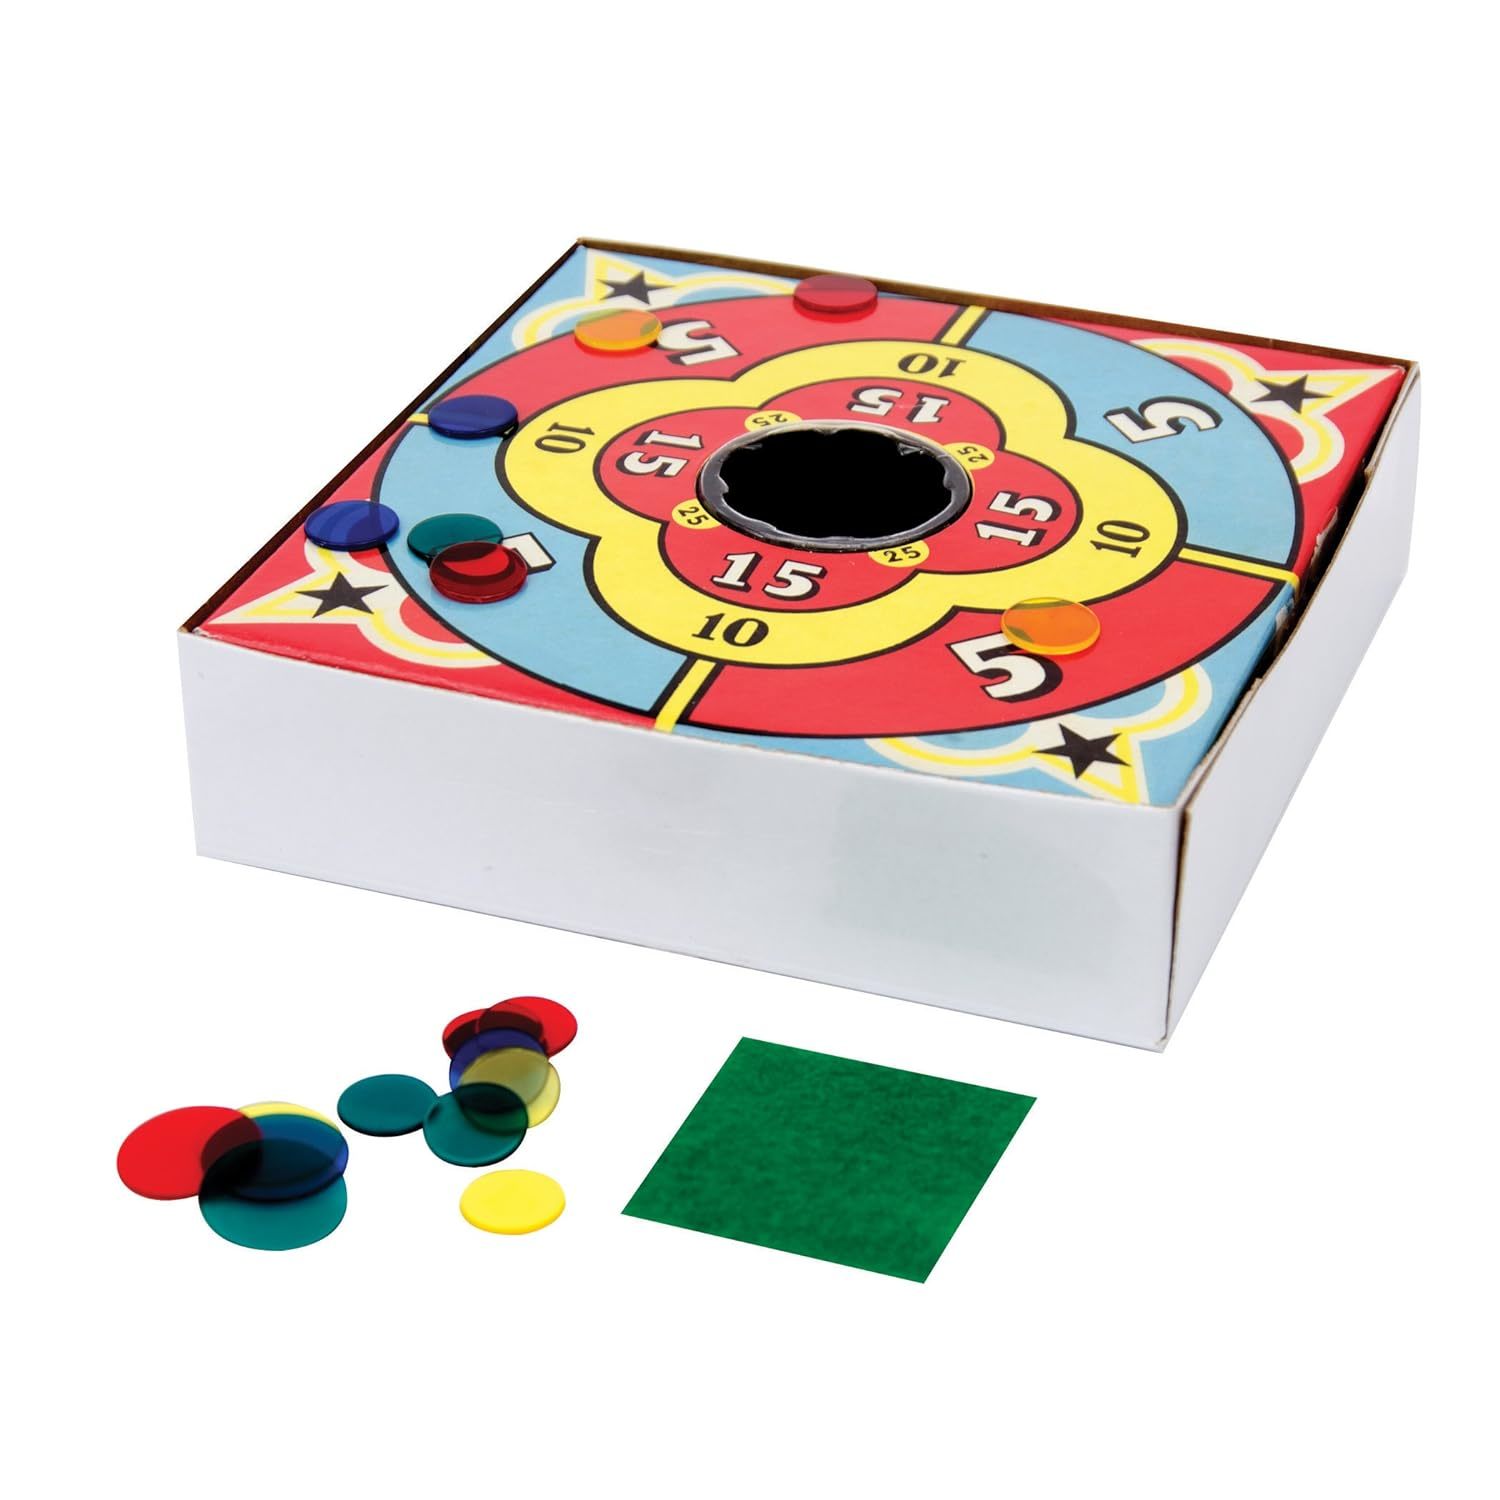 Schylling Tiddledy Winks Board Game - $17.09